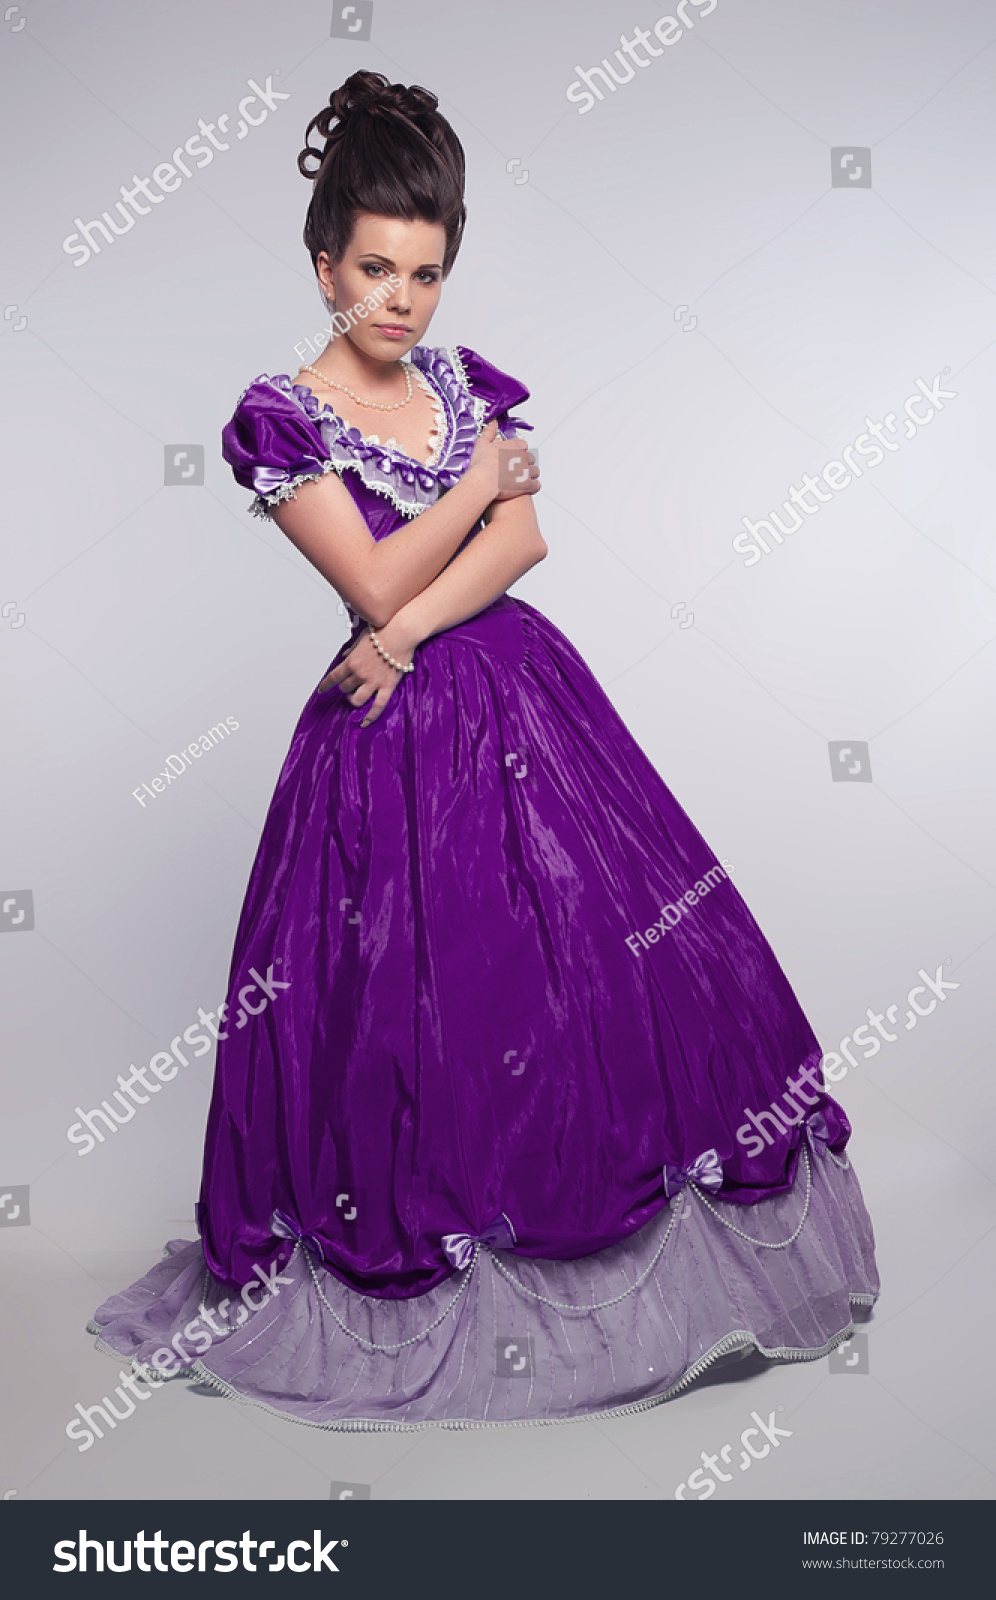 Old Fashioned Girl In Cyan Dress Stock Photo 79277026 : Shutterstock